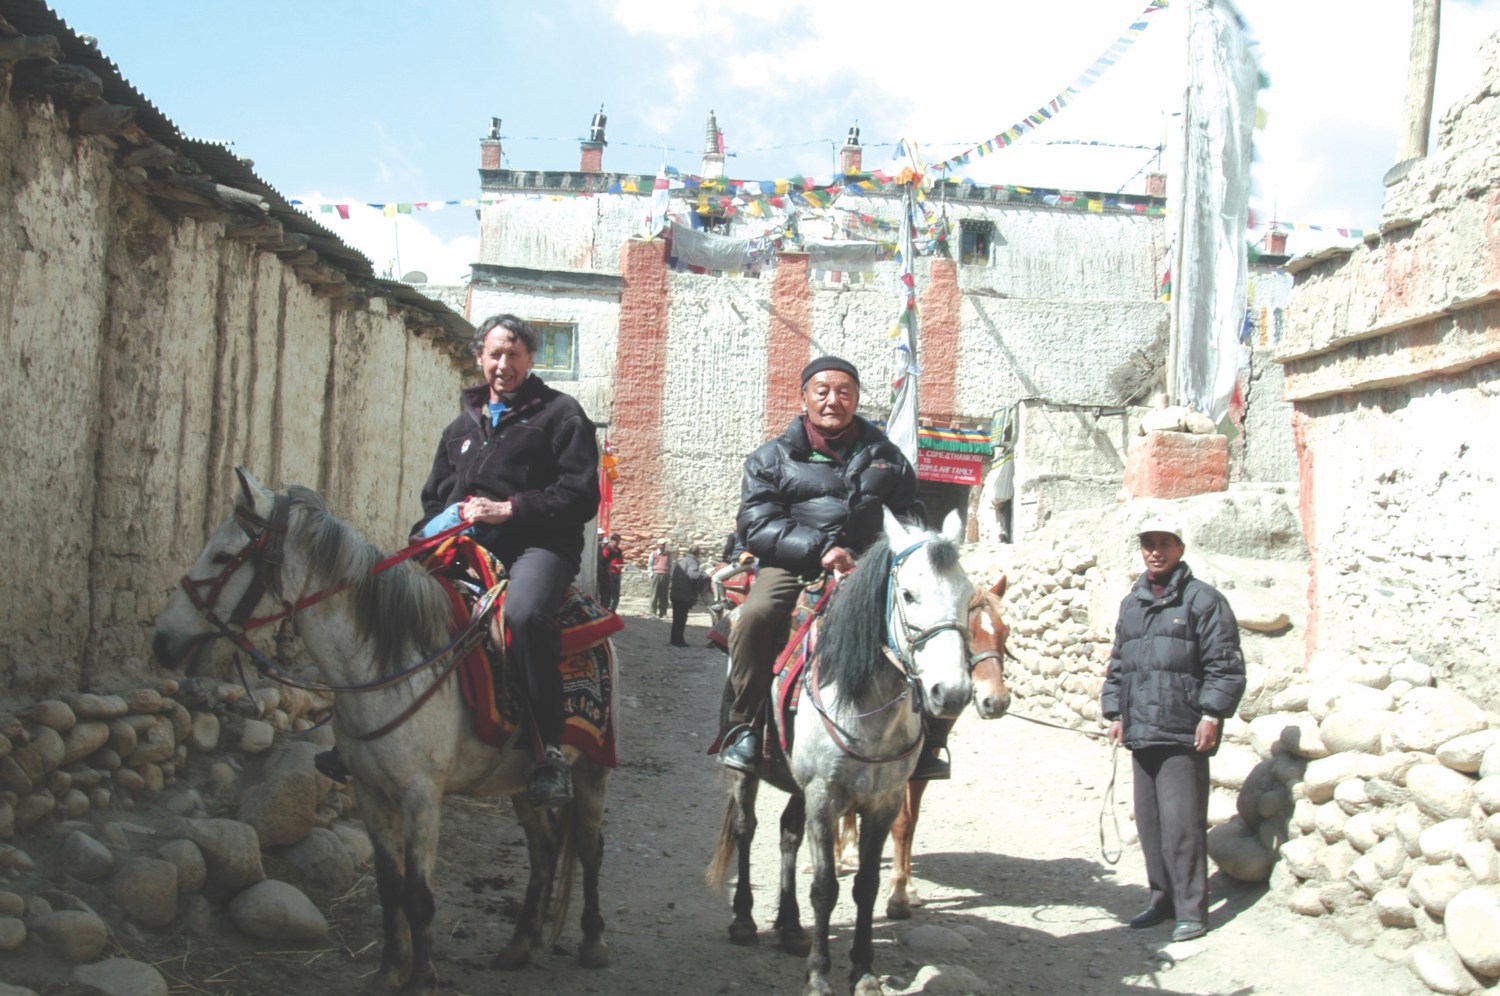 Richard Blum on horse in Nepal